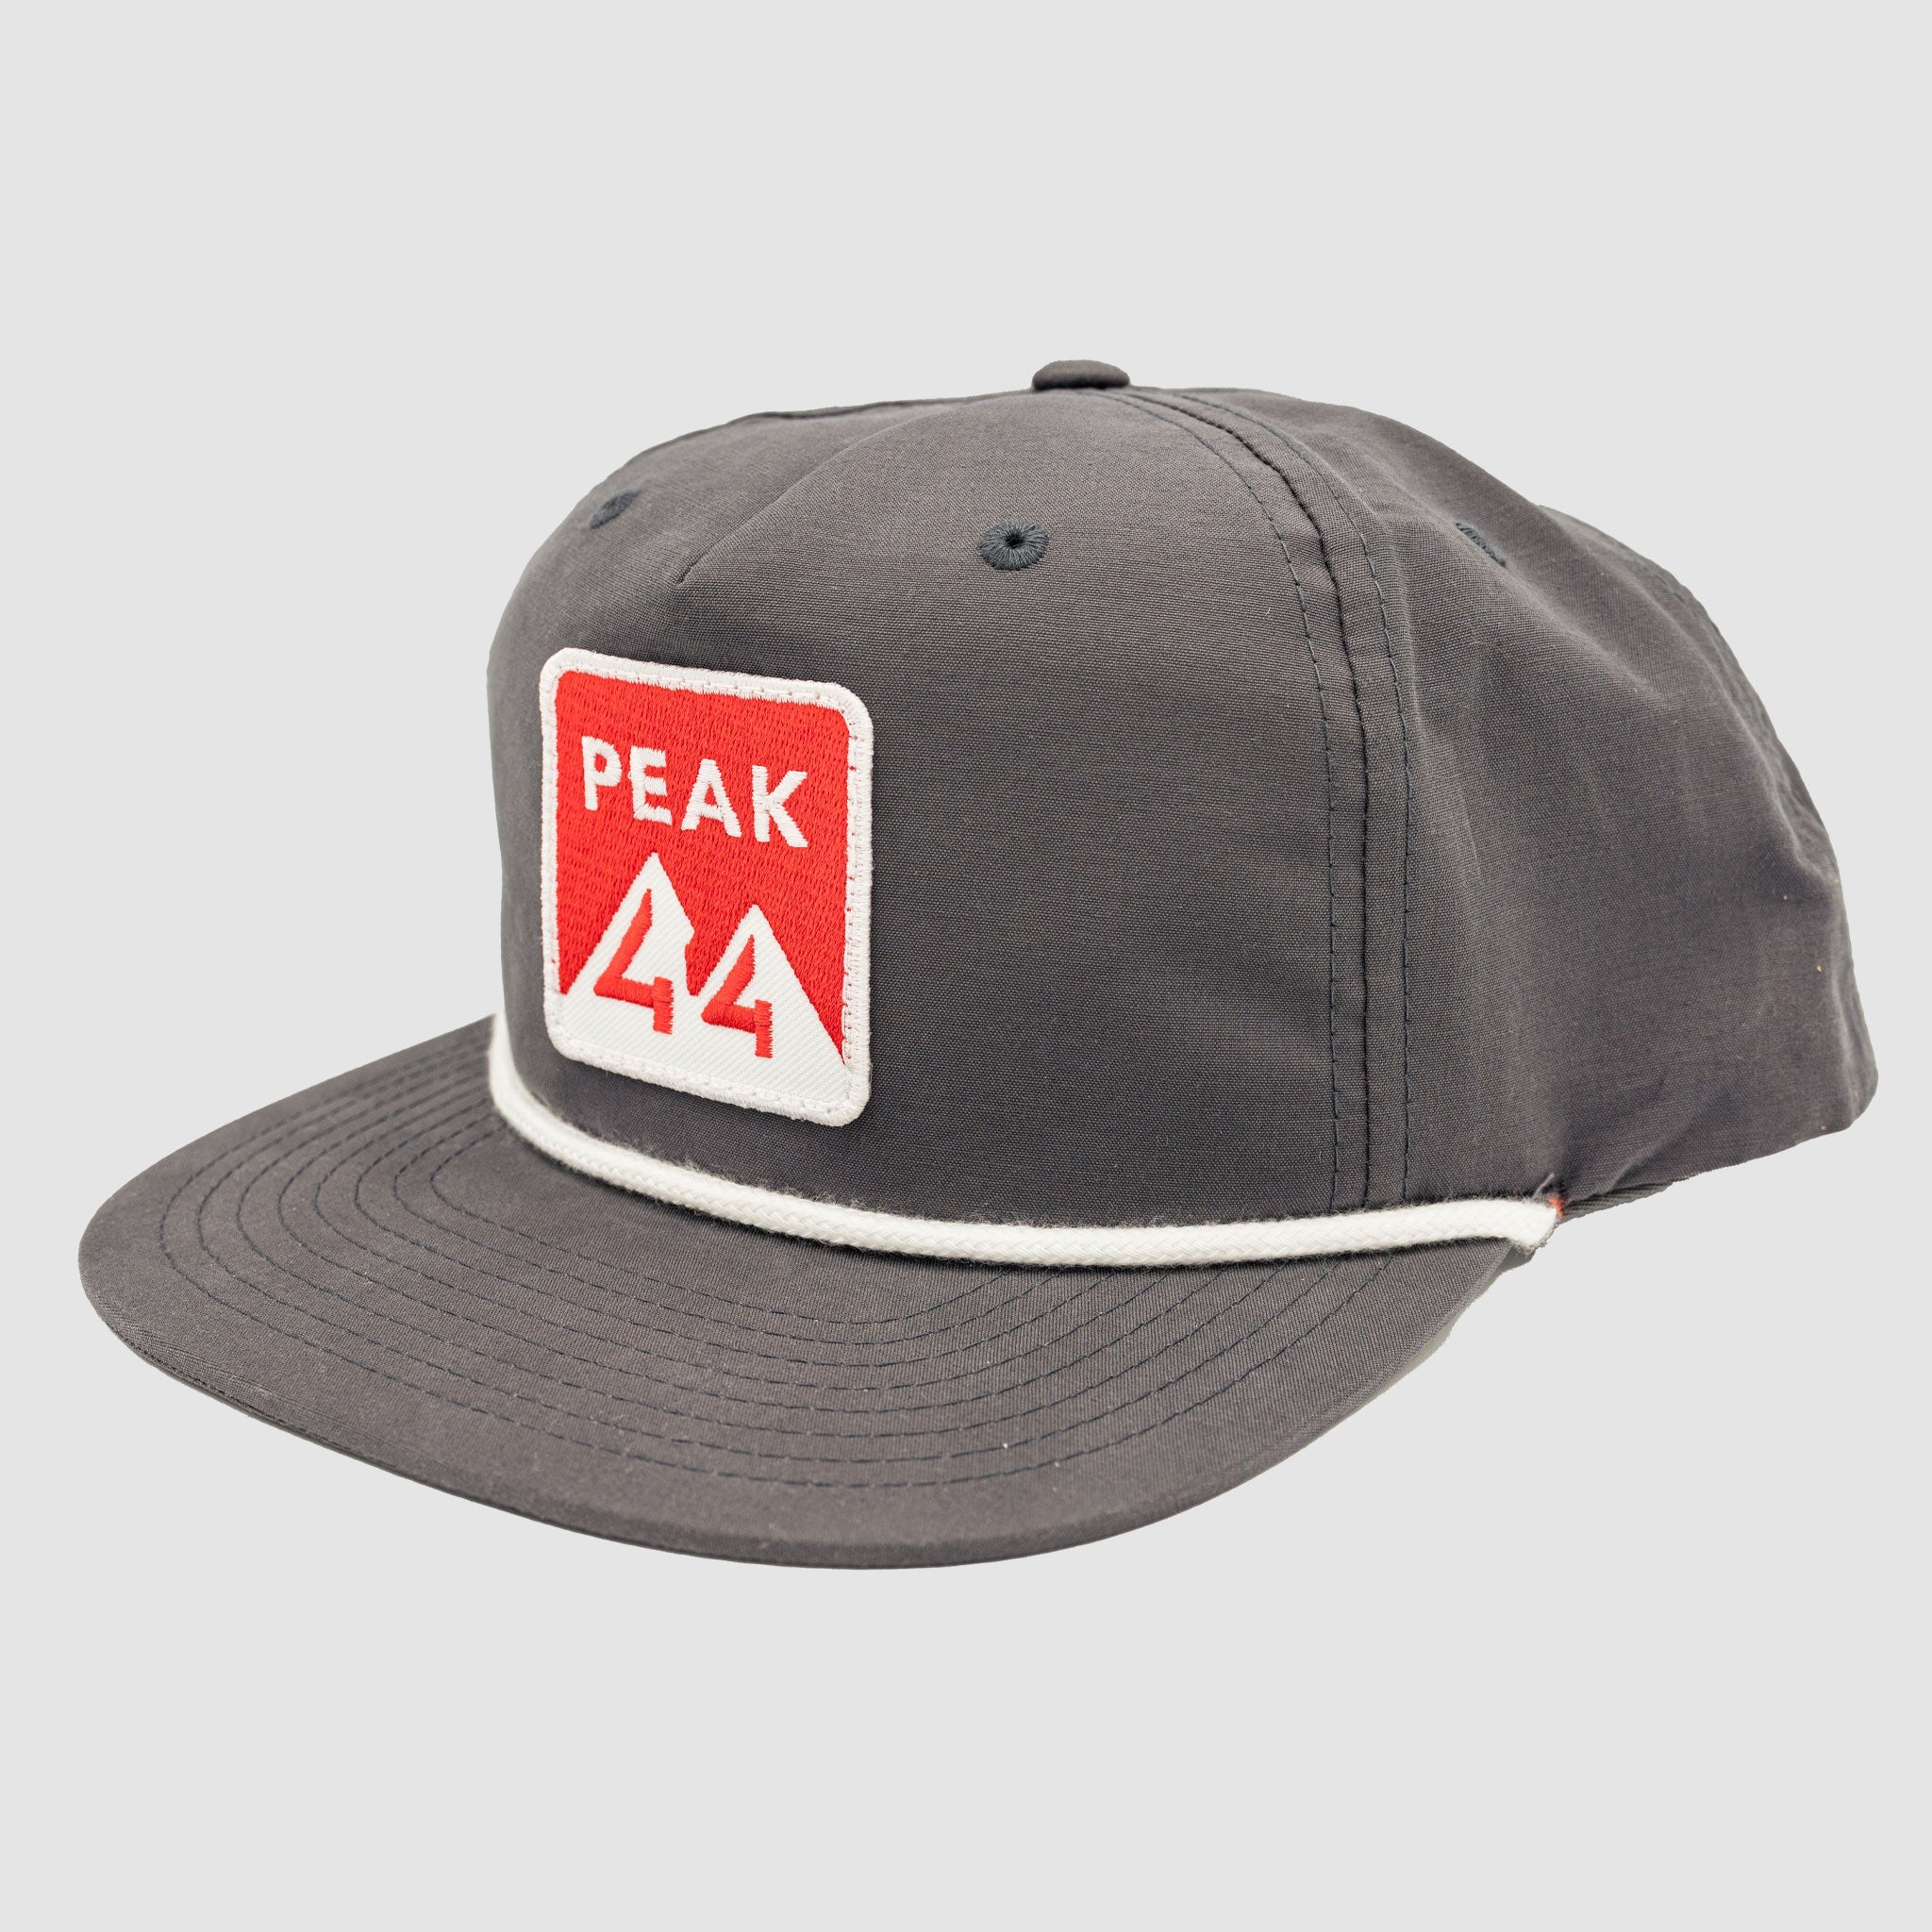 Peak 44 Charcoal Rope Hat